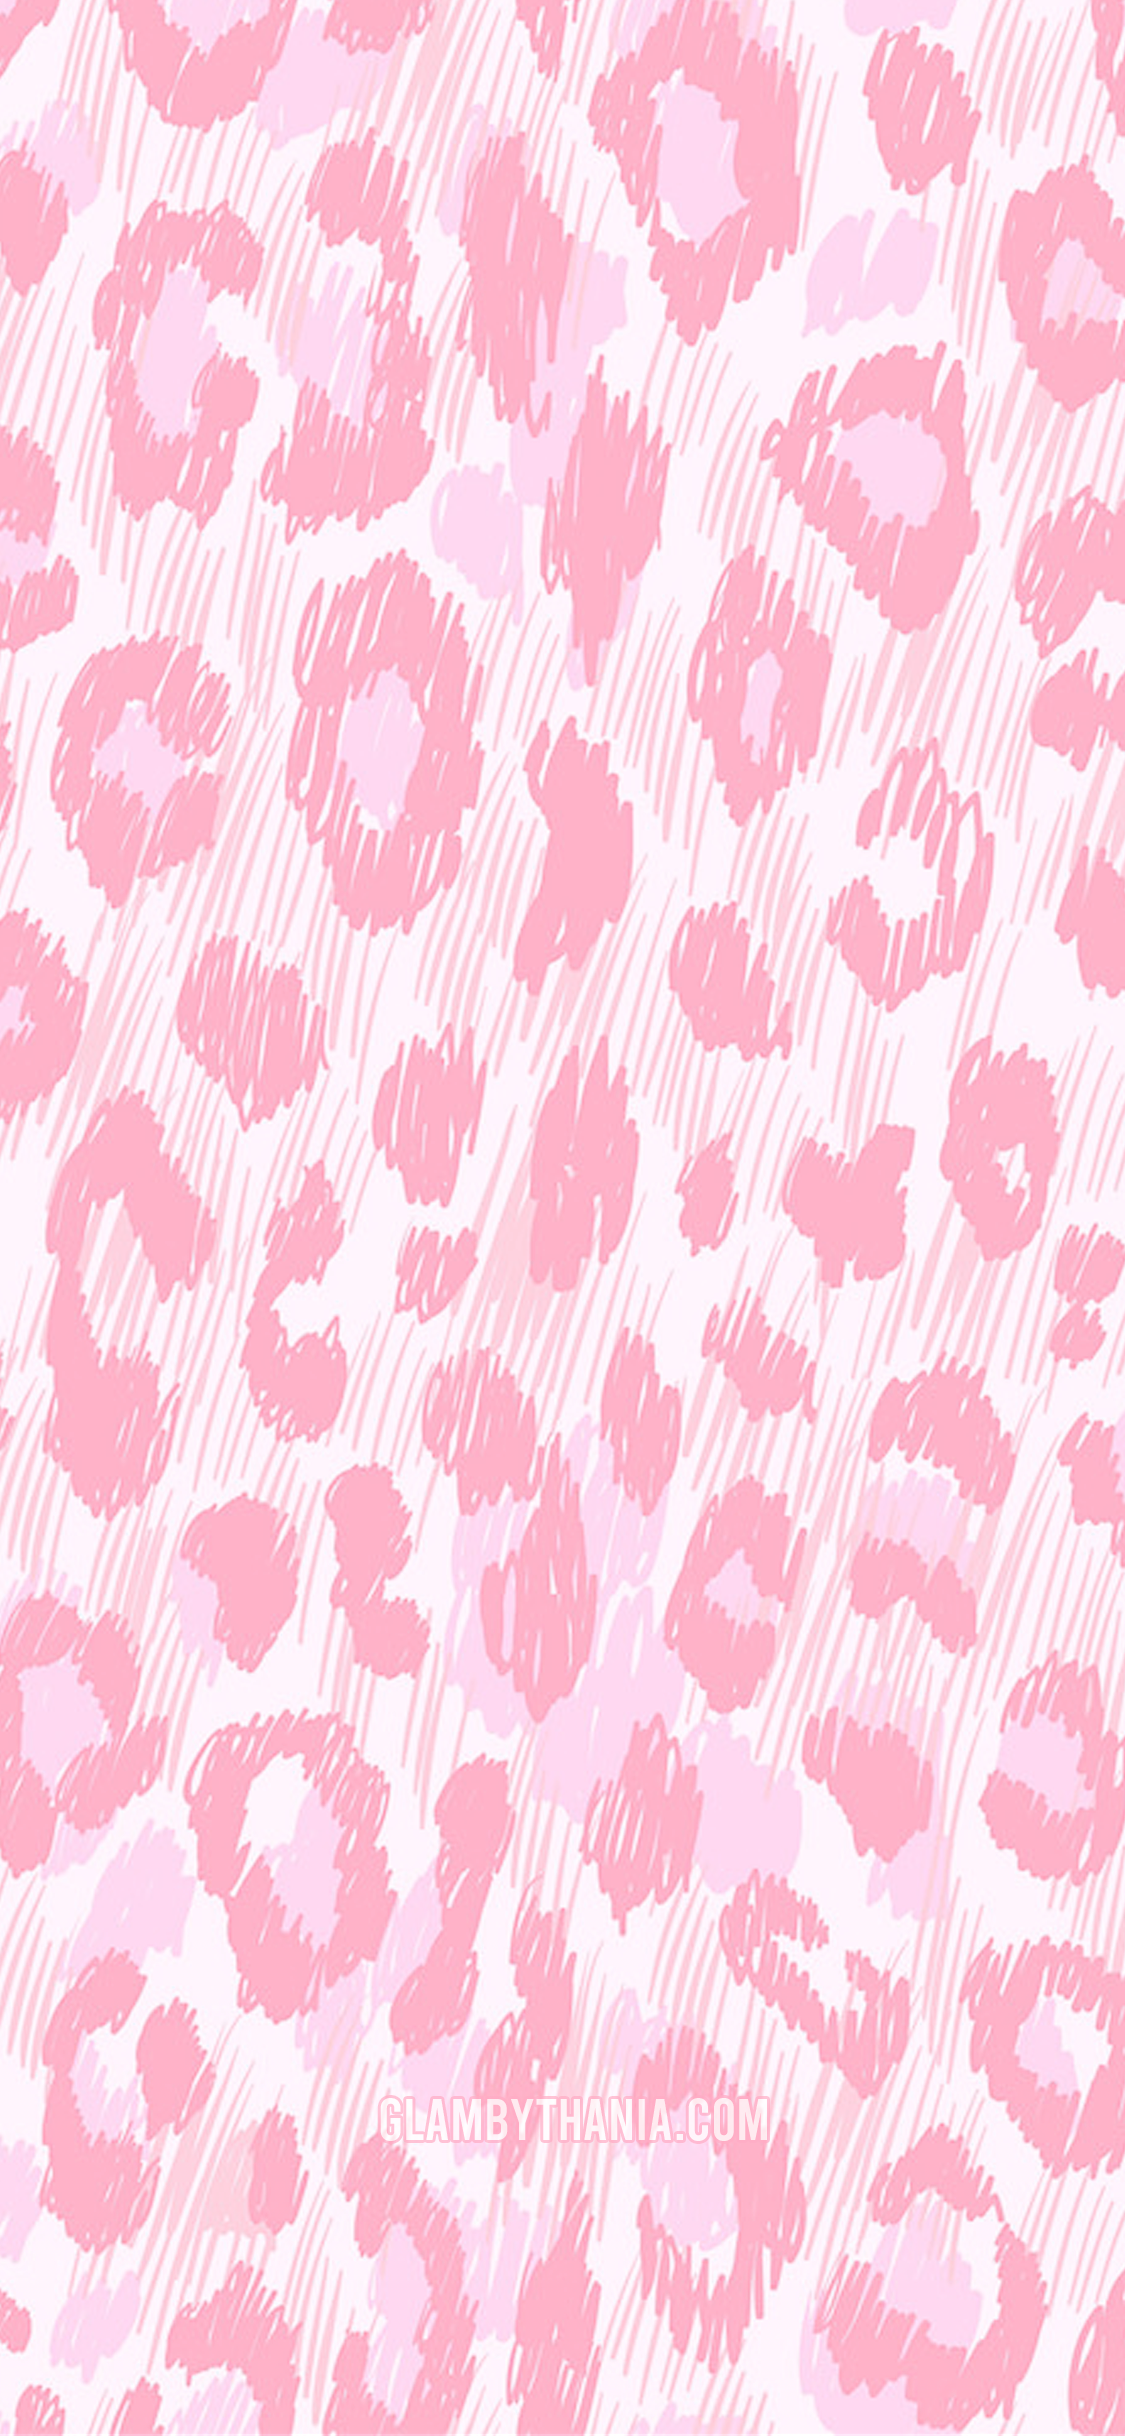 FREE Pink & Girly Luxury iphone wallpaper